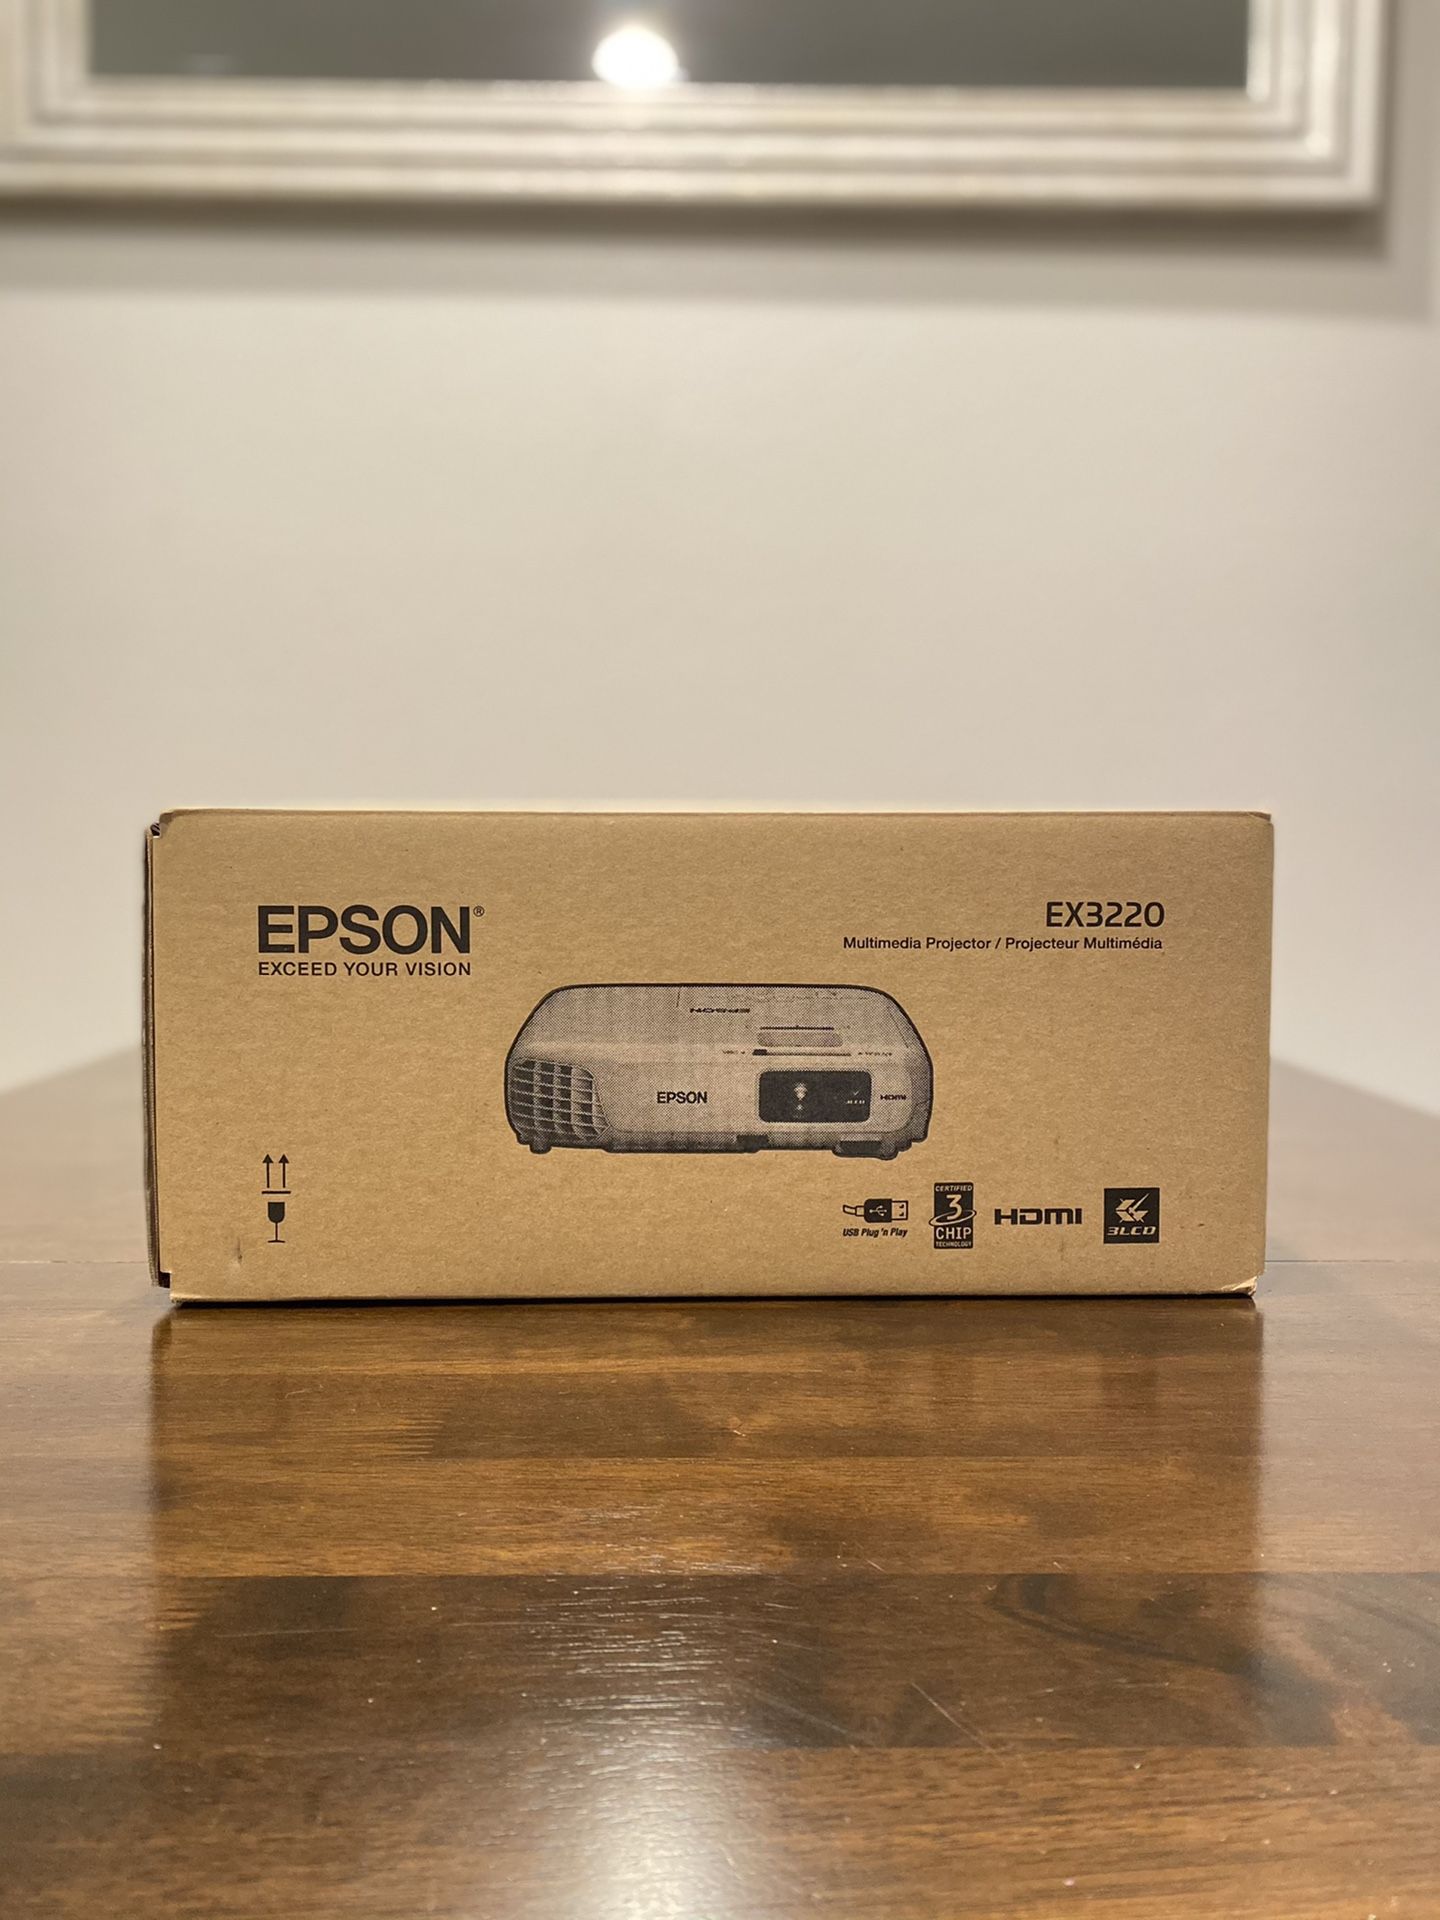 EPSON EX3220 Projector